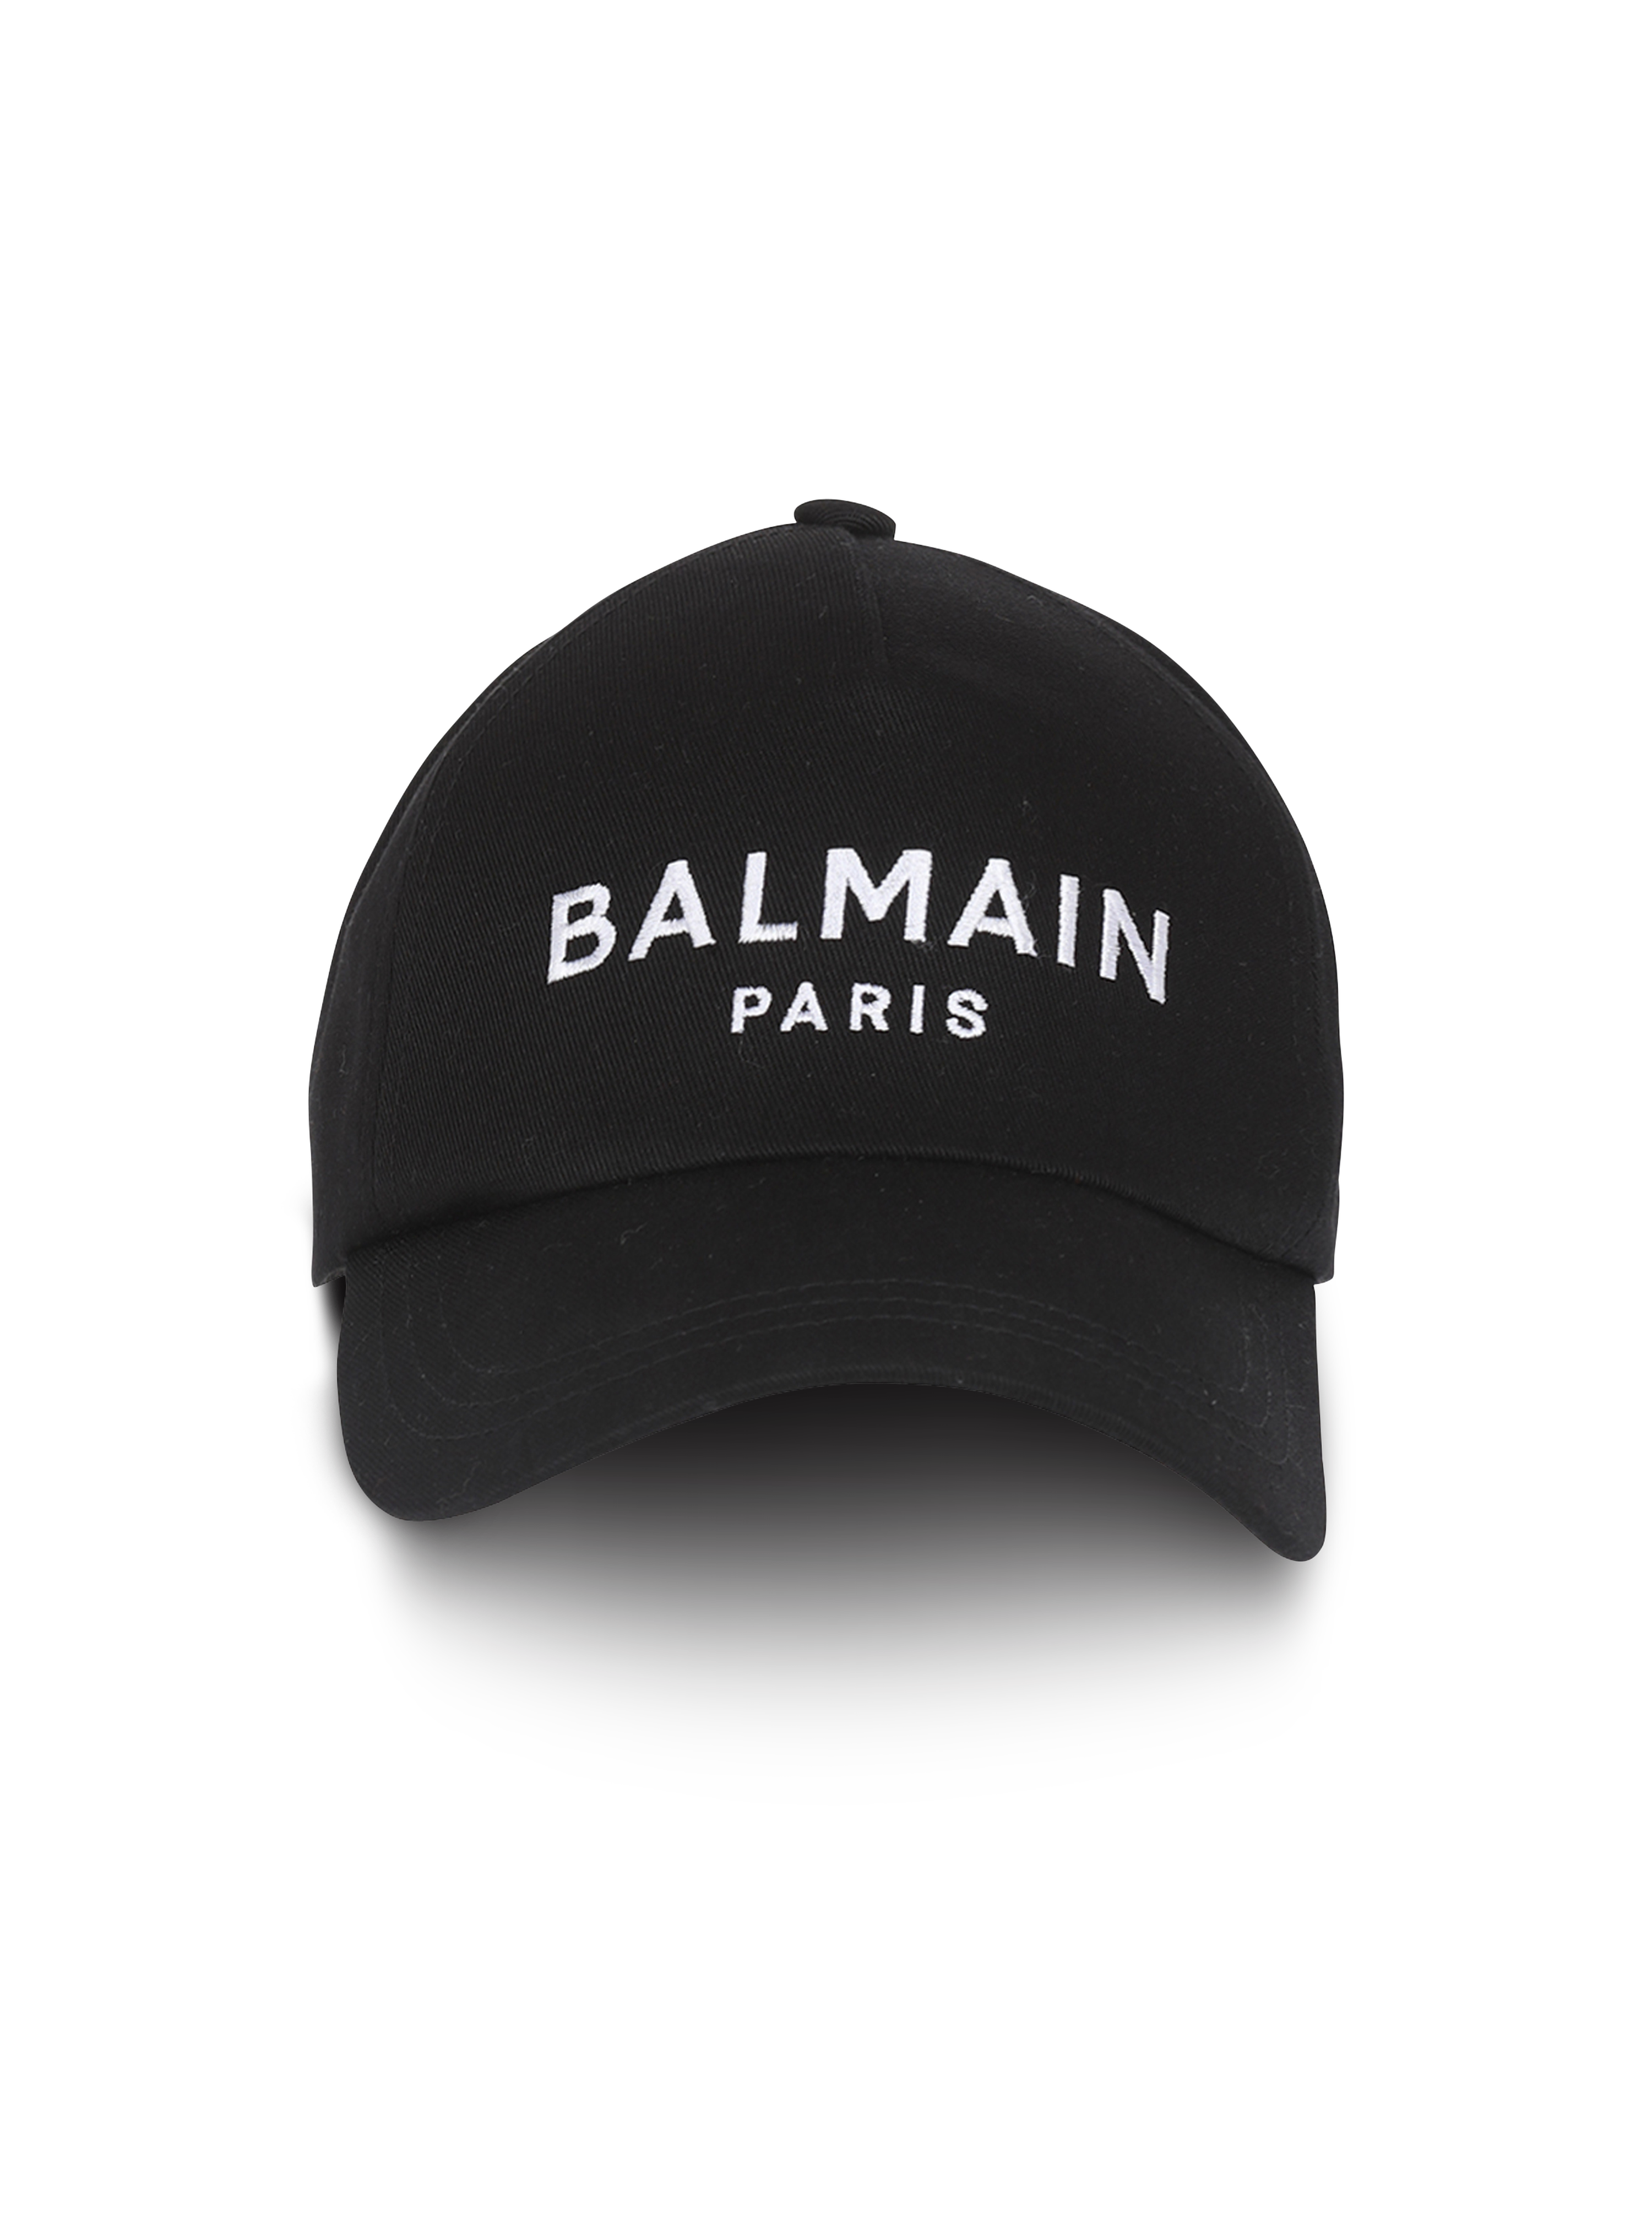 Casquette en coton avec logo Balmain Paris, noir